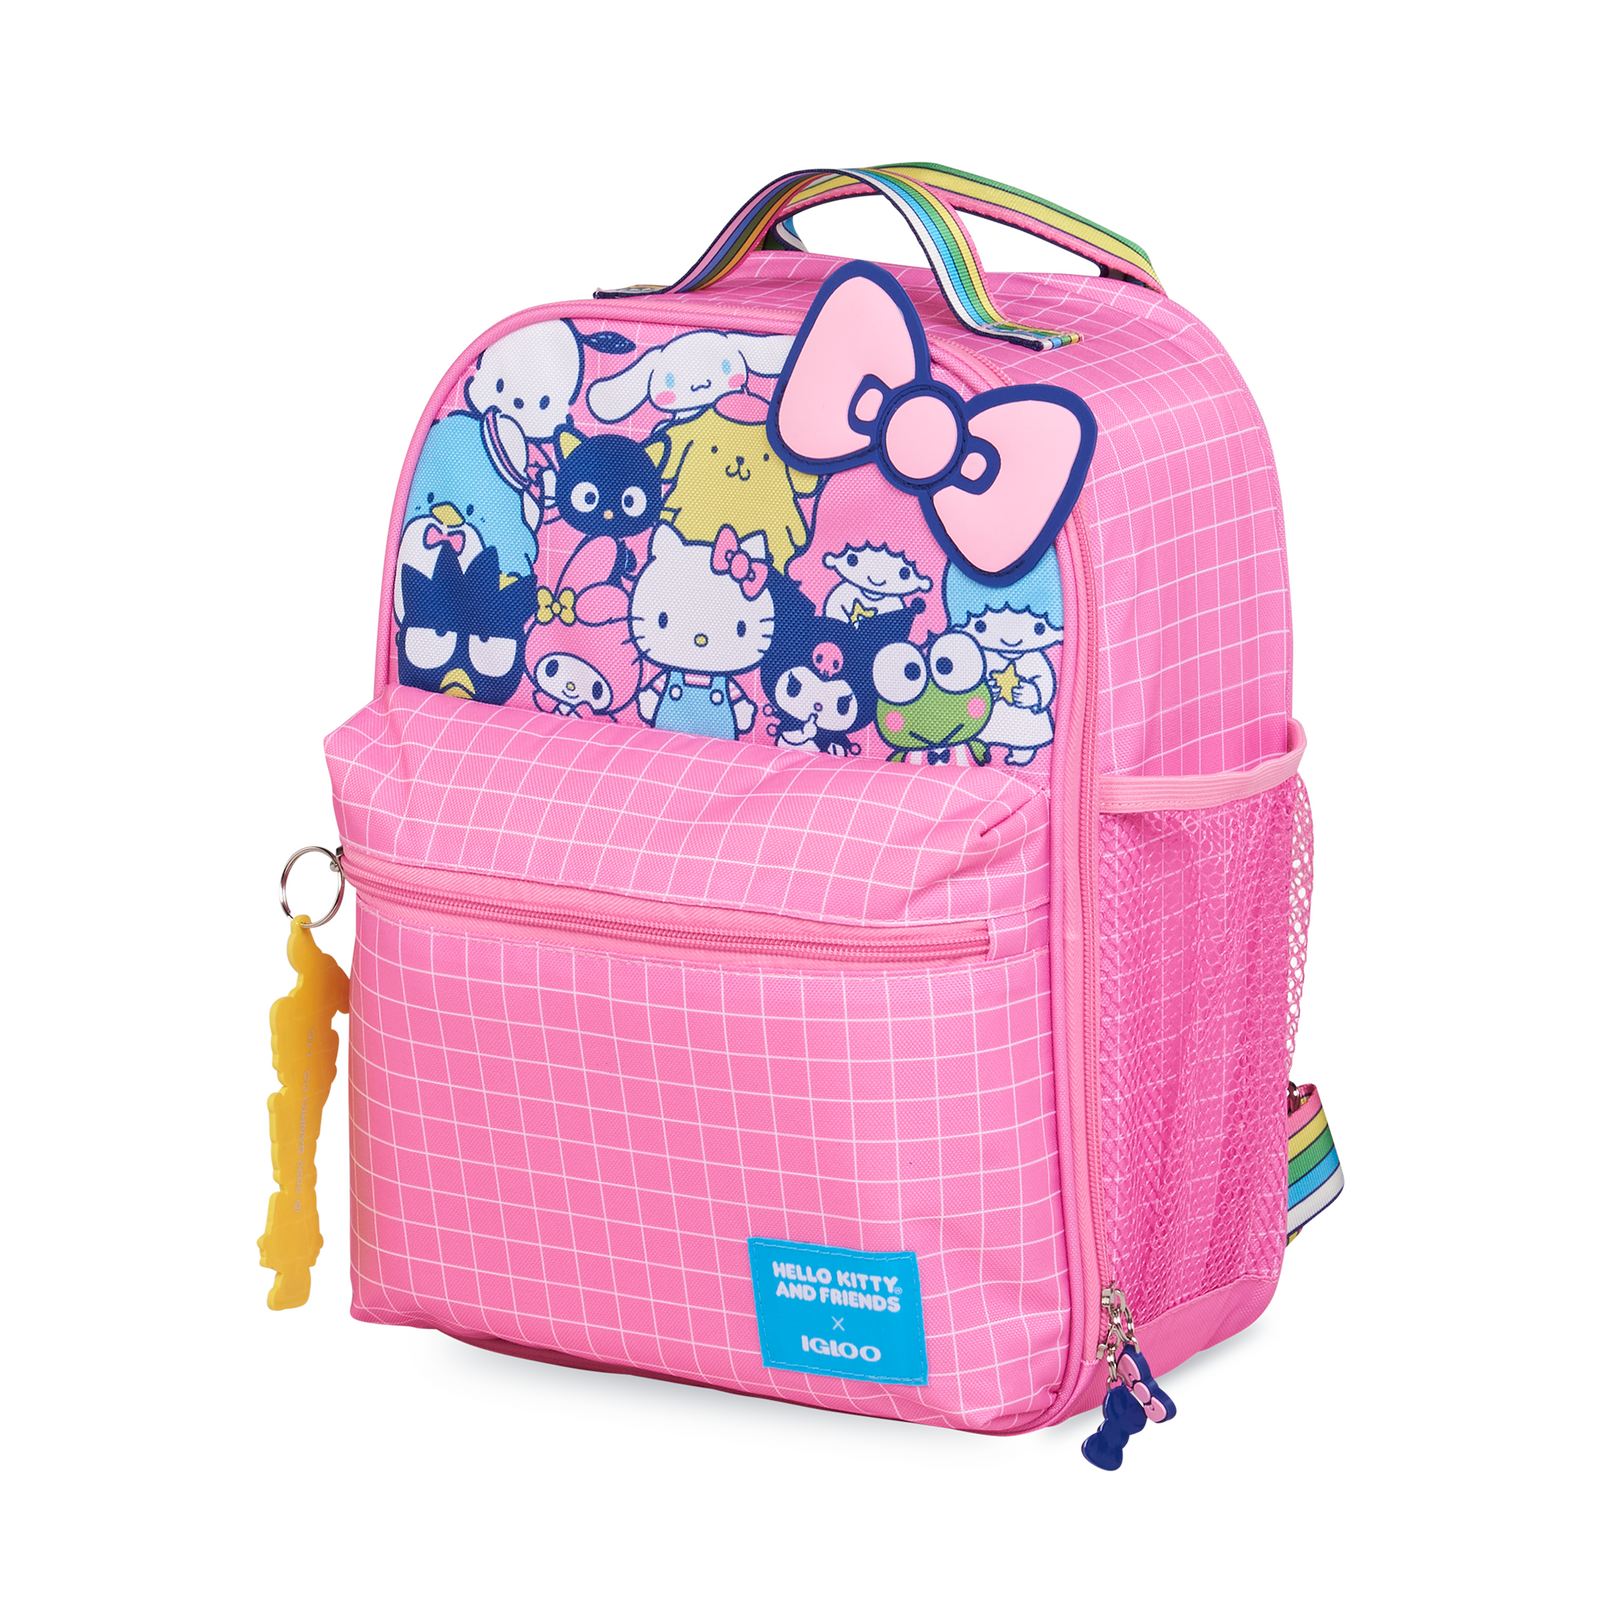 Sanrio Schoolbag Primary School Students' Backpack Children's Load